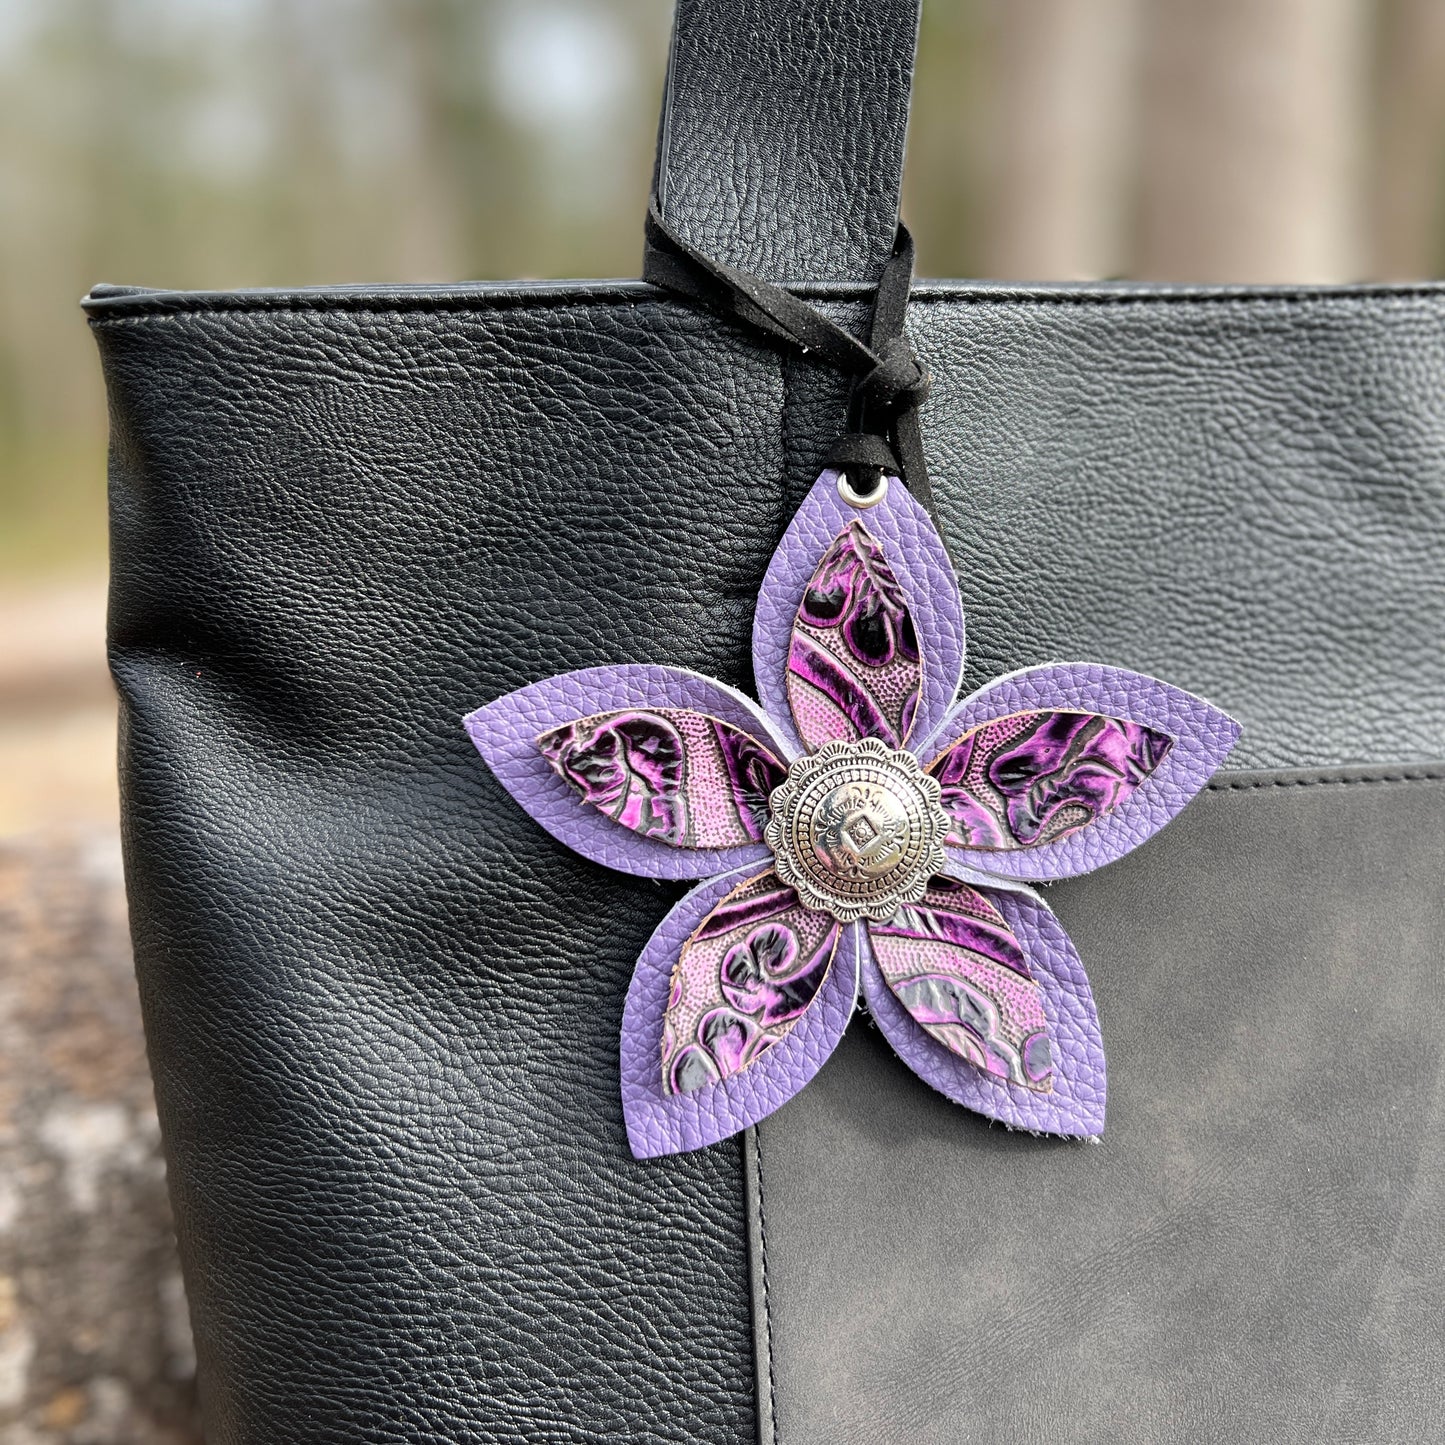 Leather Flower Bag Charm - Large Flower with Loop - Lavender Floral